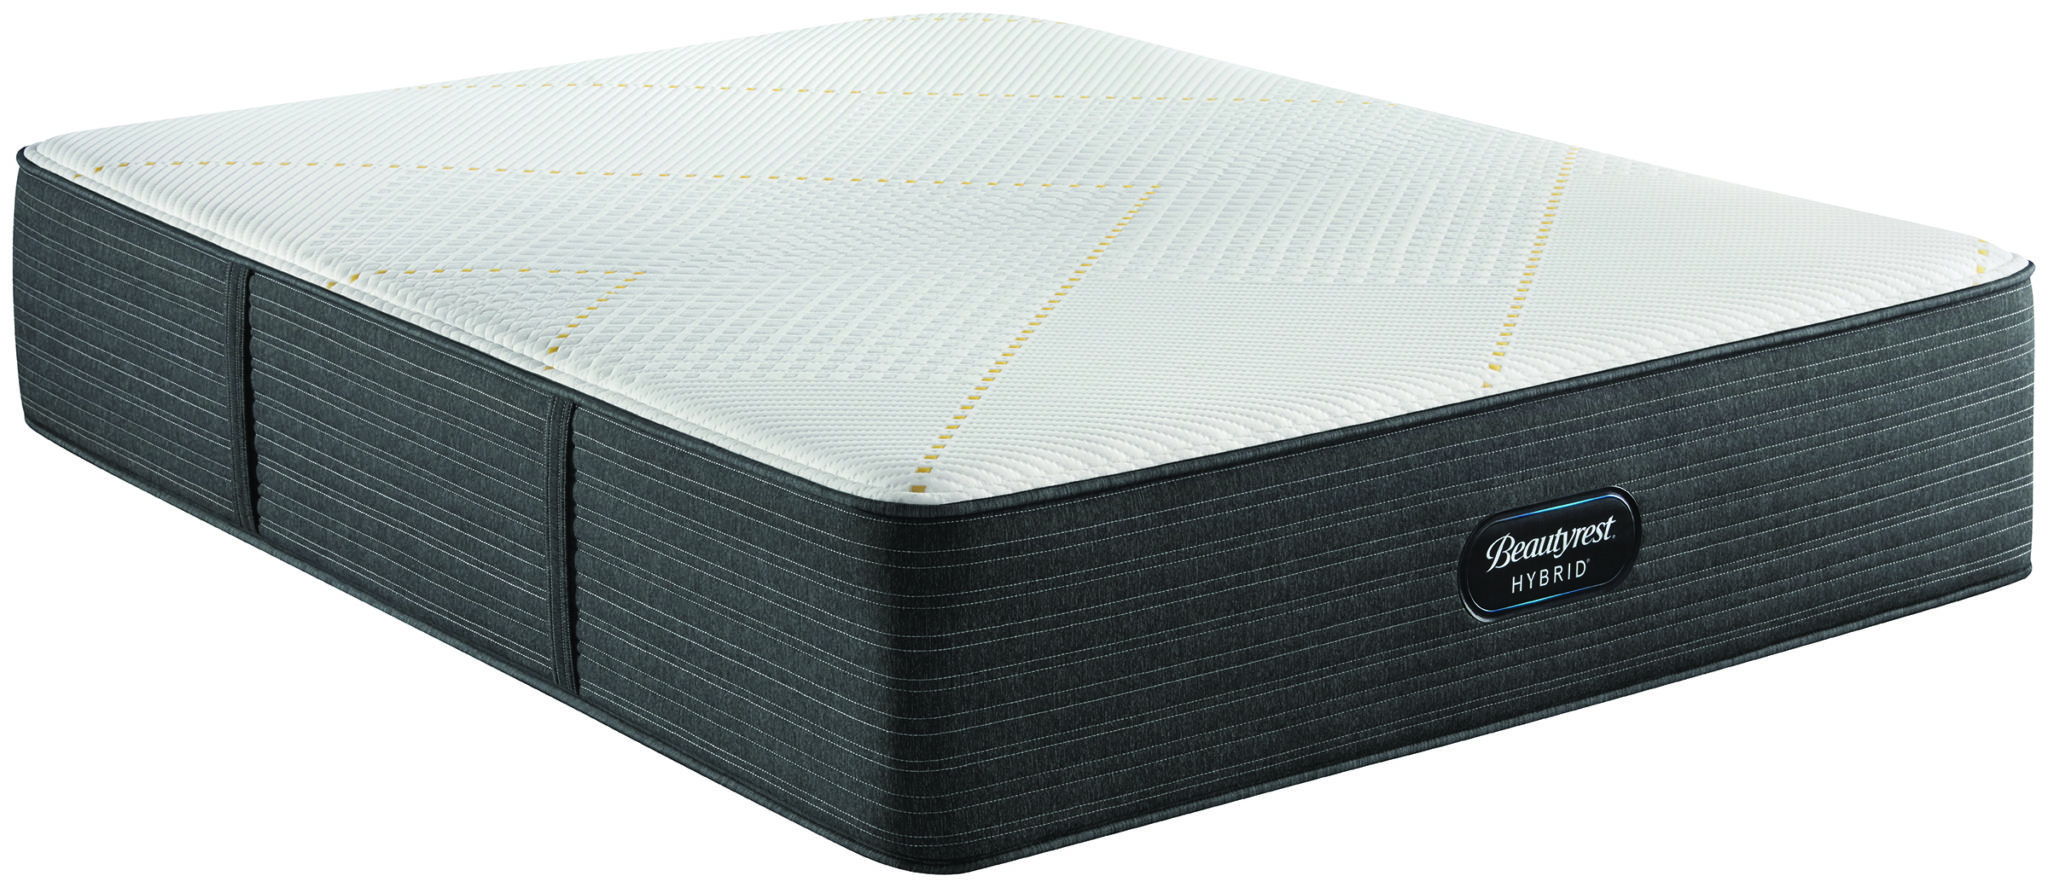 beautyrest black hybrid mattress sale